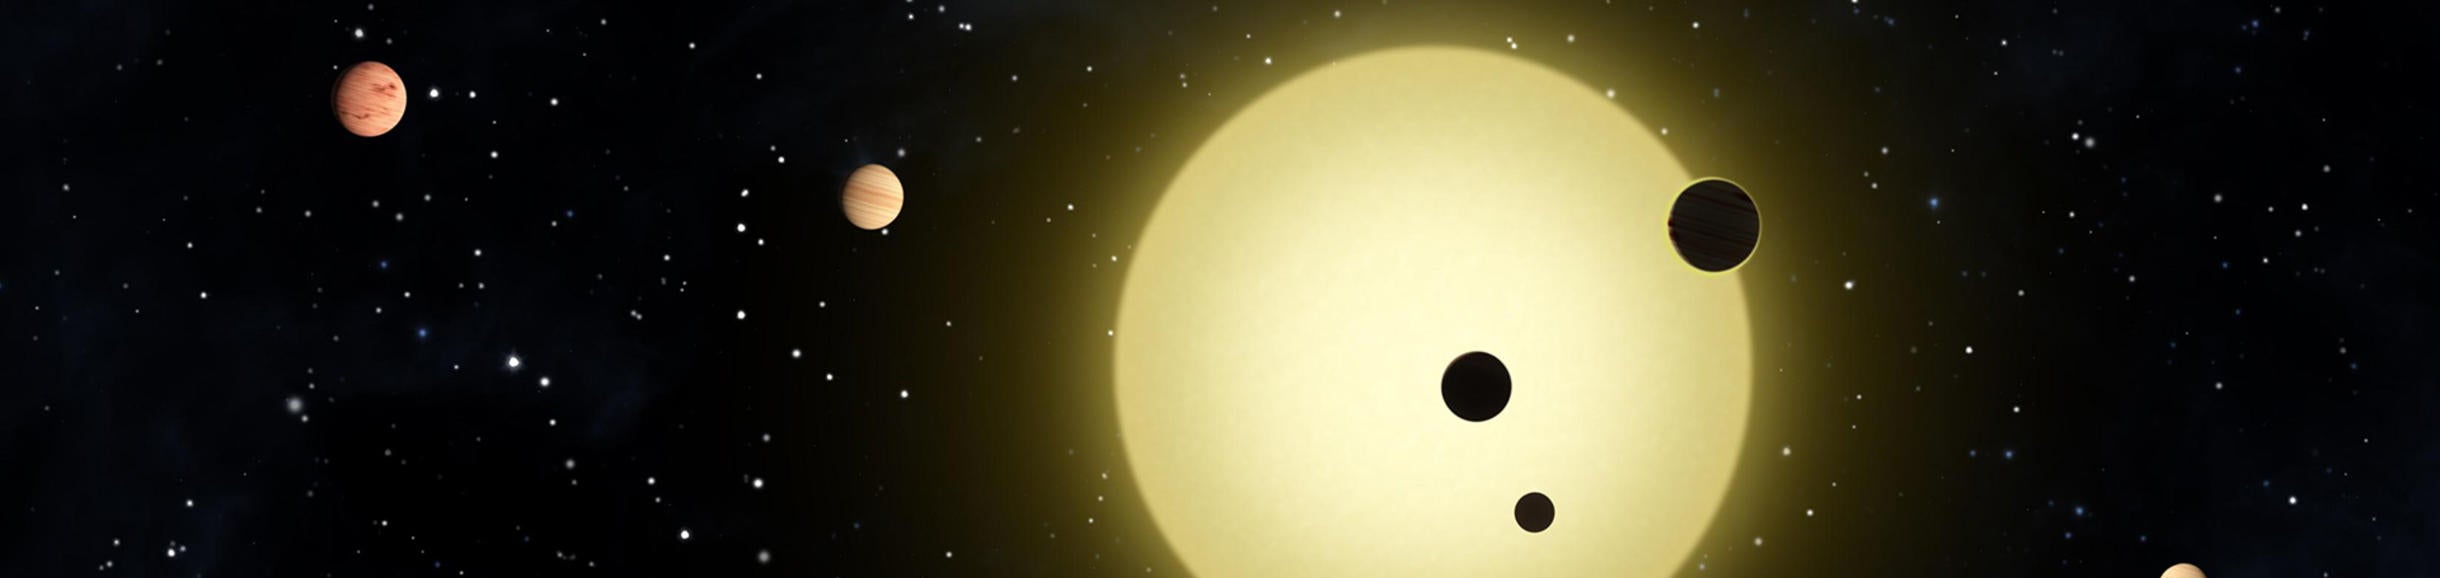 Kepler-11 system | Credits: NASA/JPL-Caltech